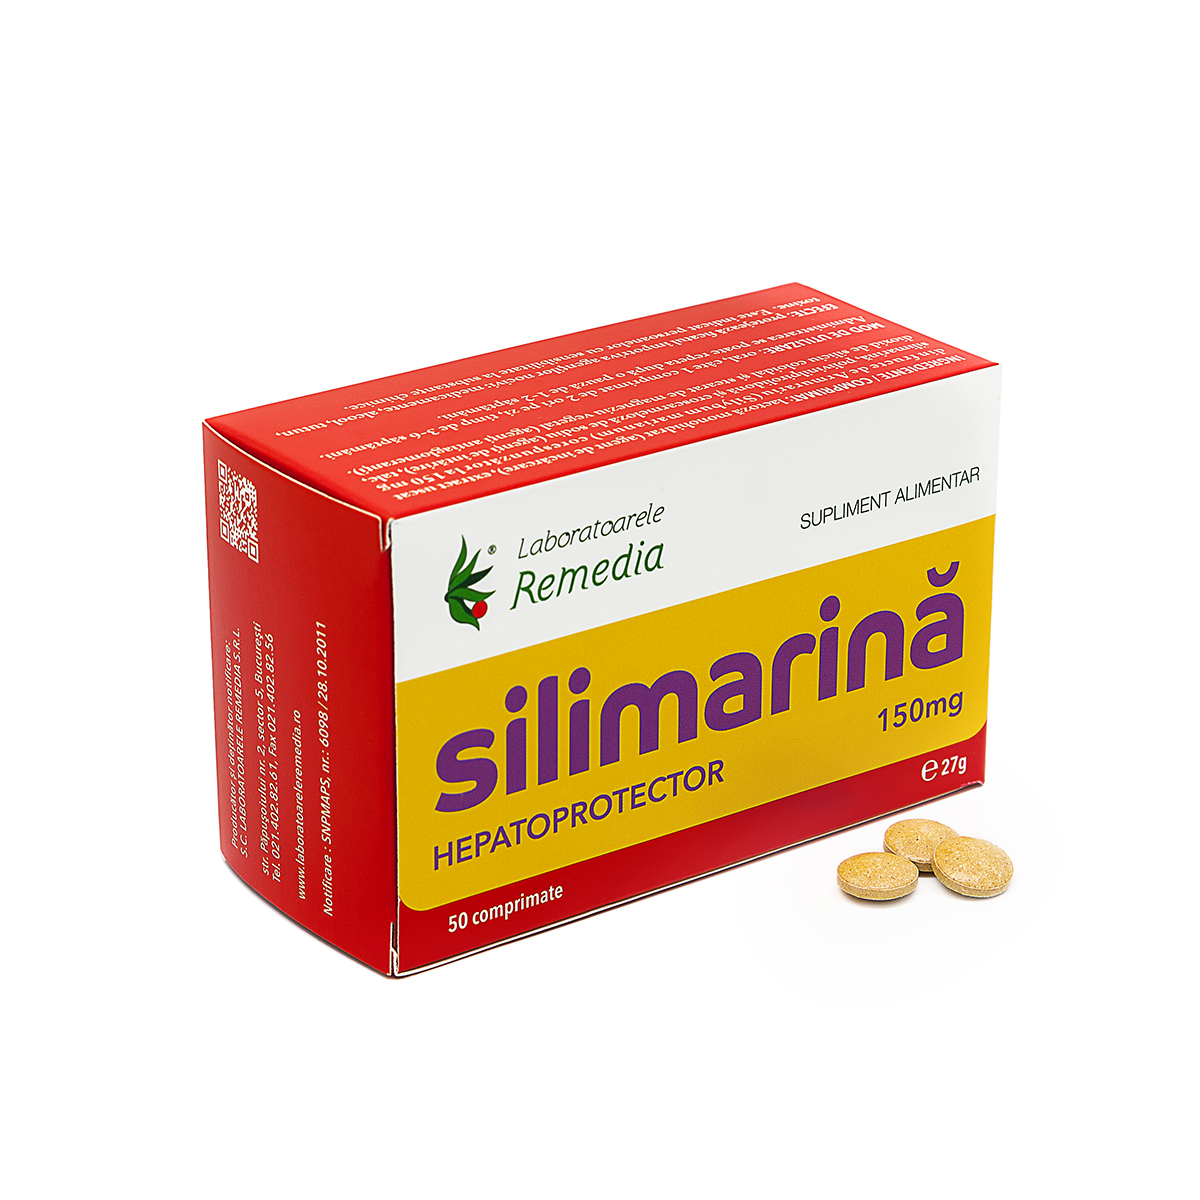 Silimarina 150mg Hepatoprotector, 50 comprimate, Remedia